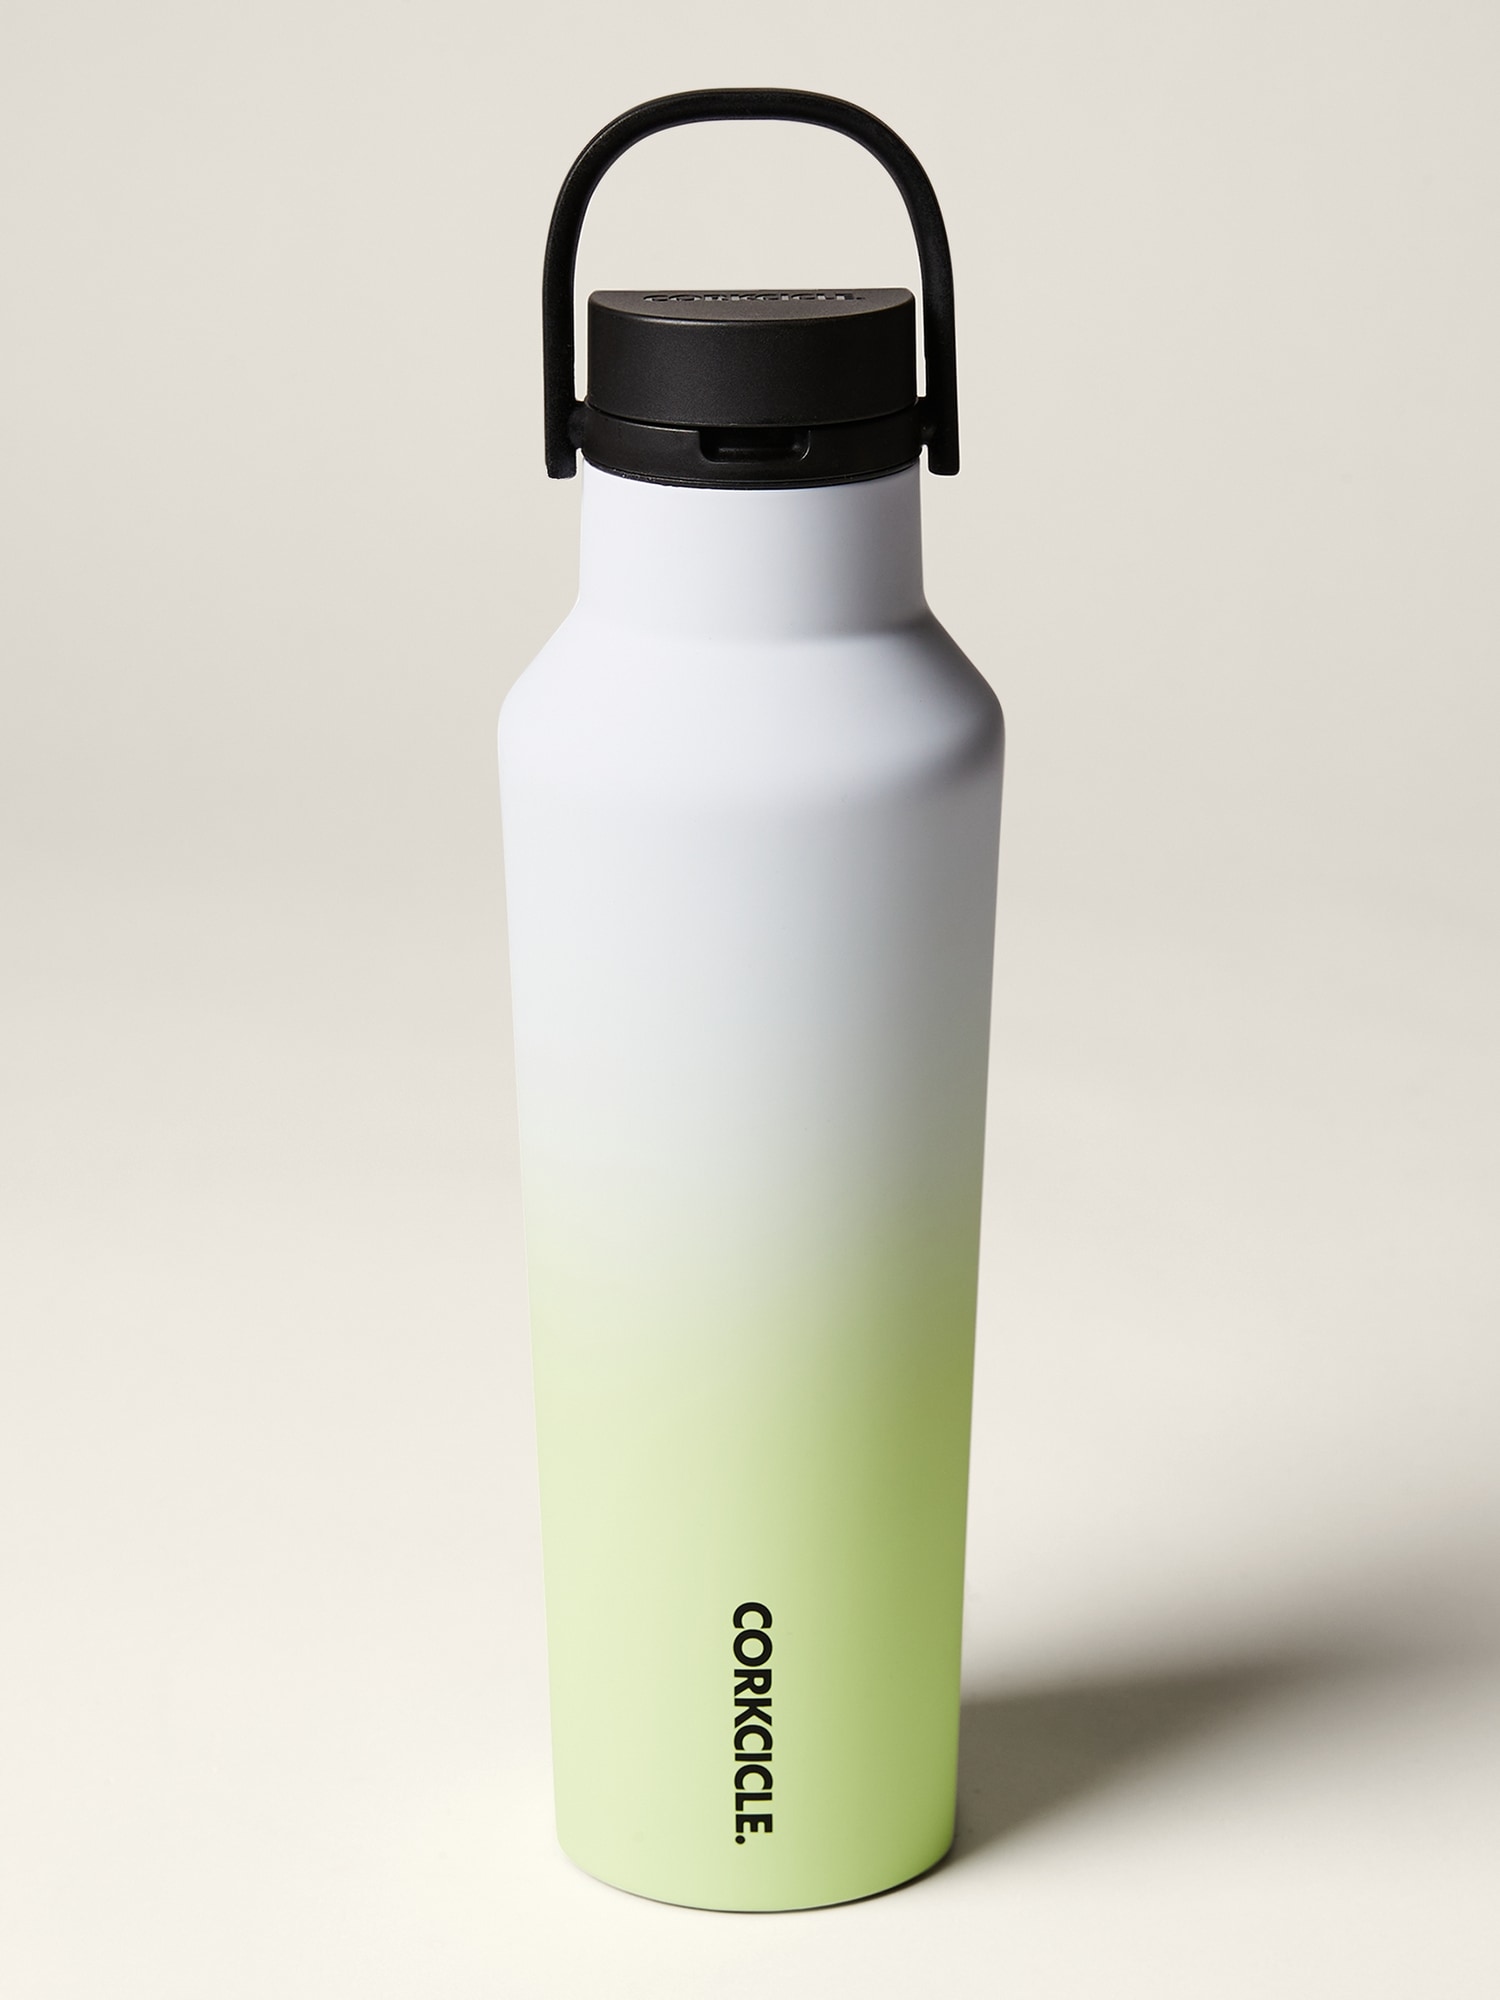 Corkcicle Water Bottles